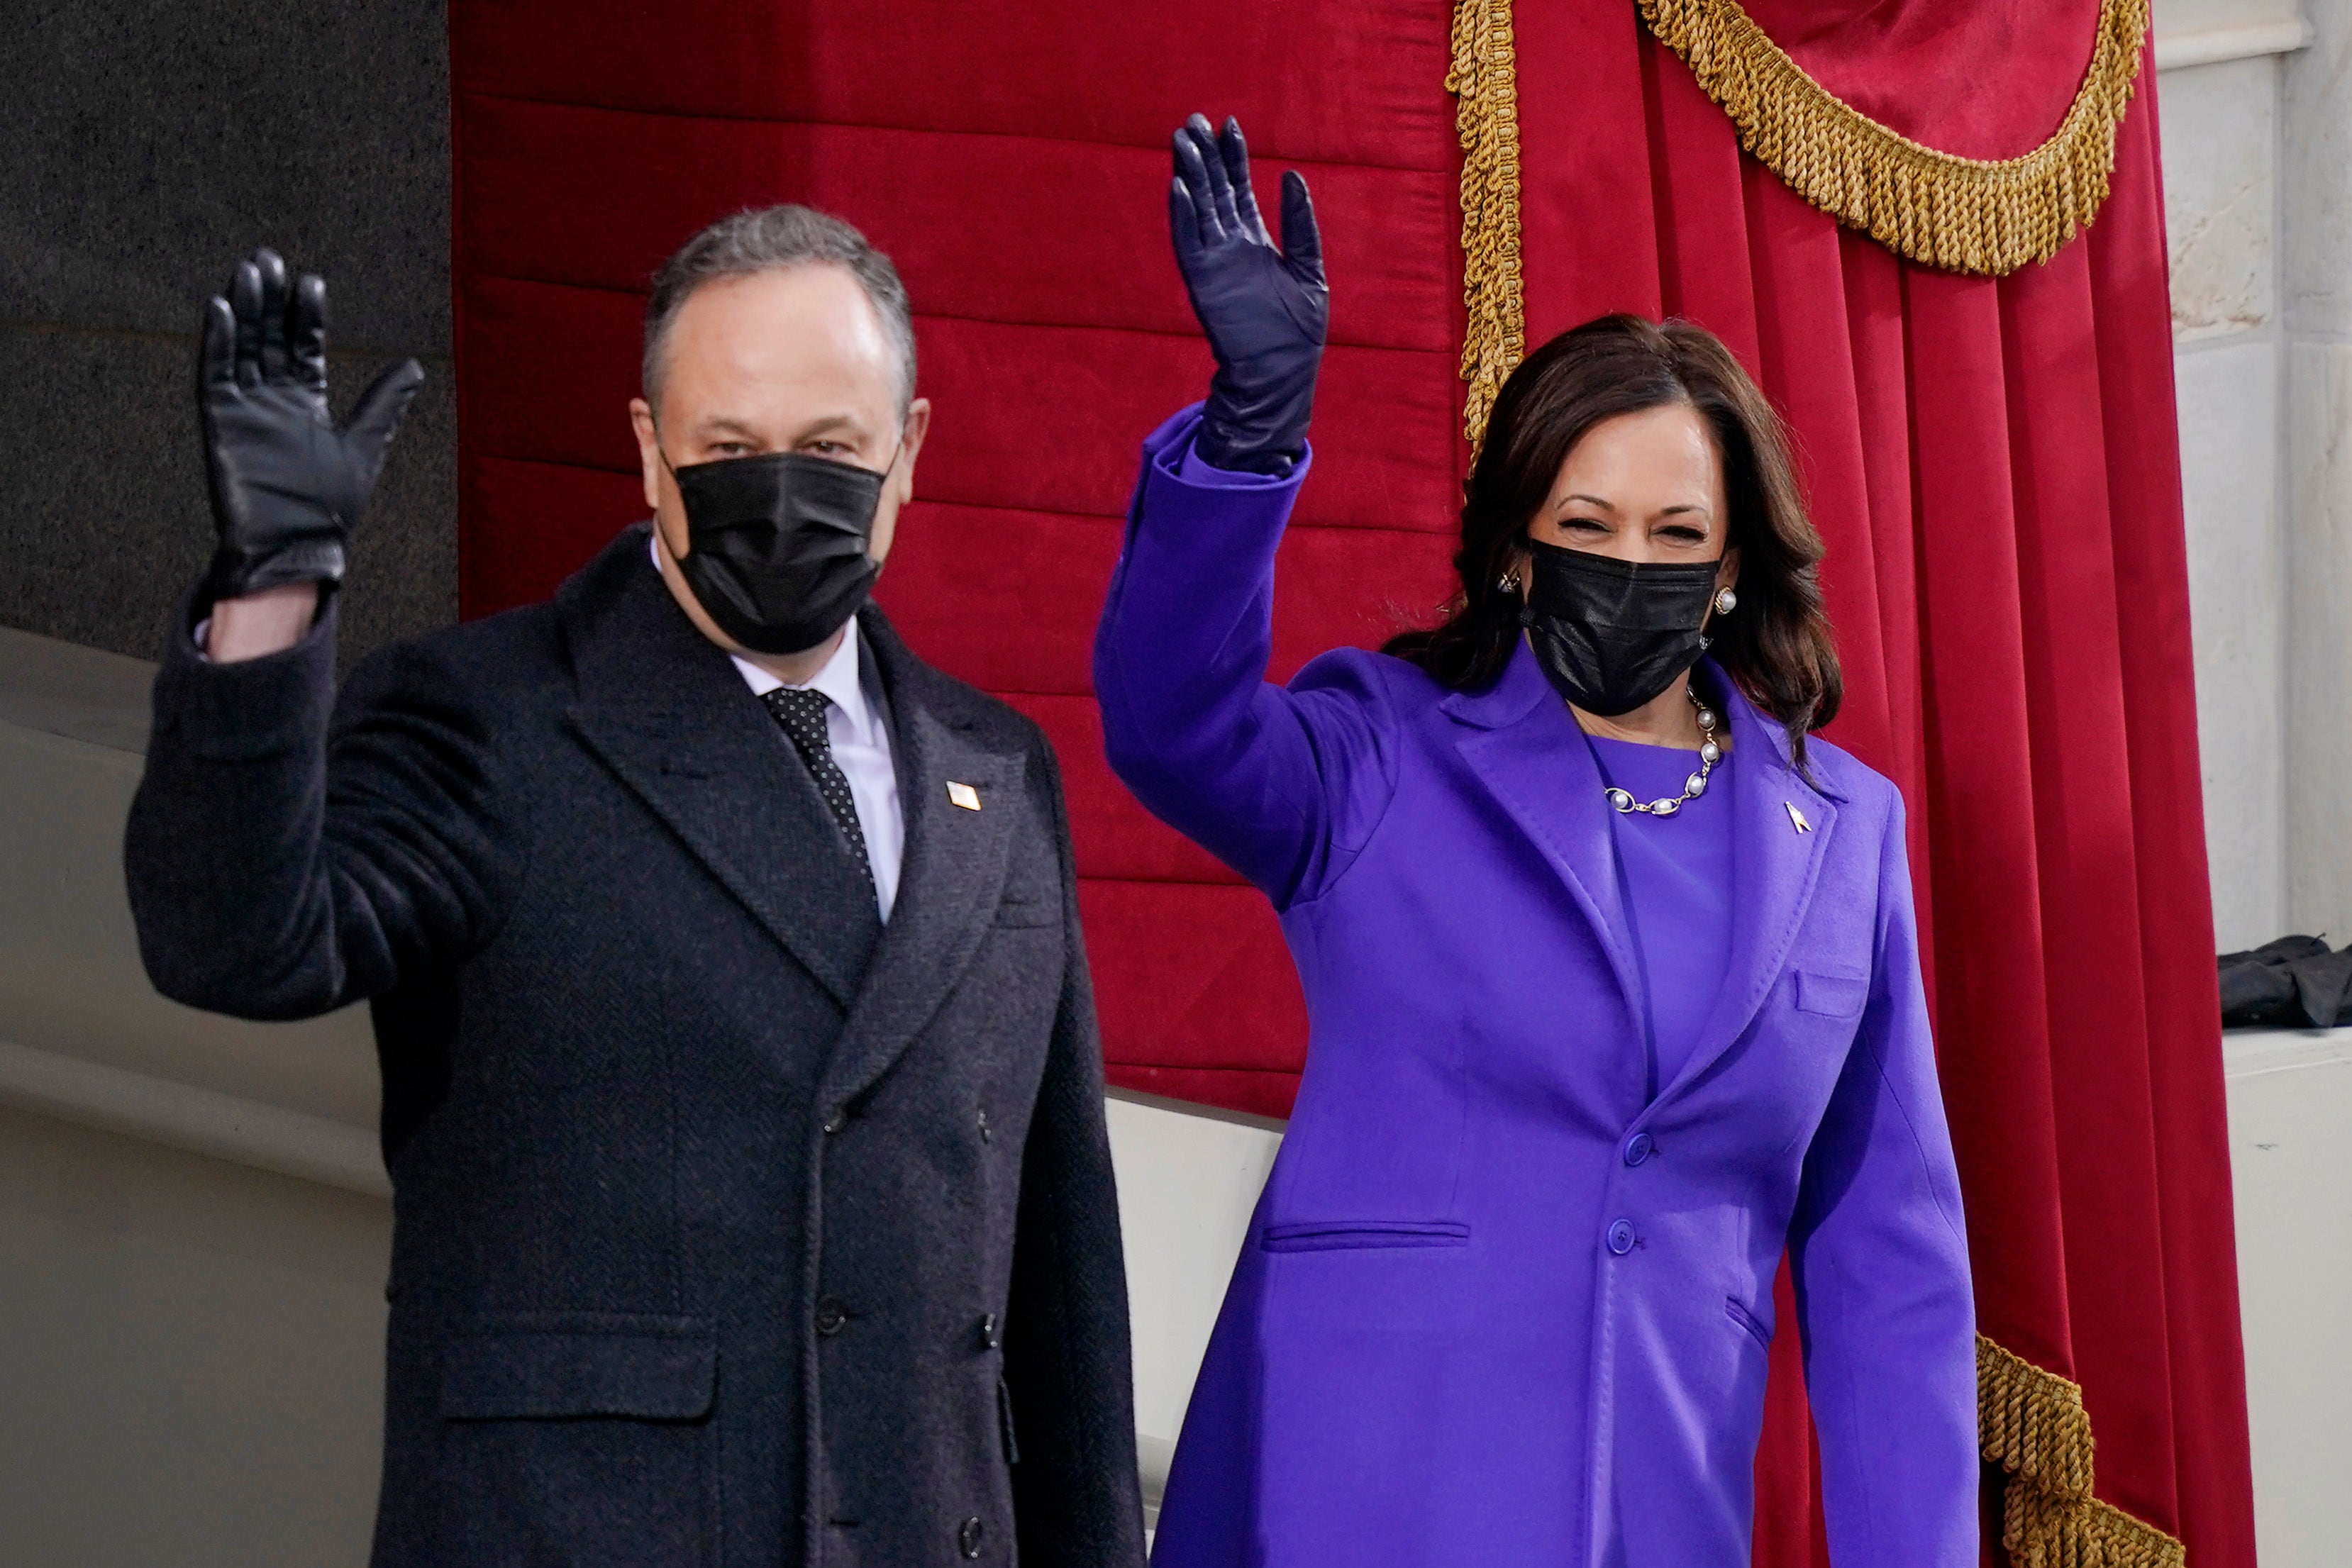 Kamala Harris, Hillary Clinton and Michelle Obama wear purple in possession of Biden